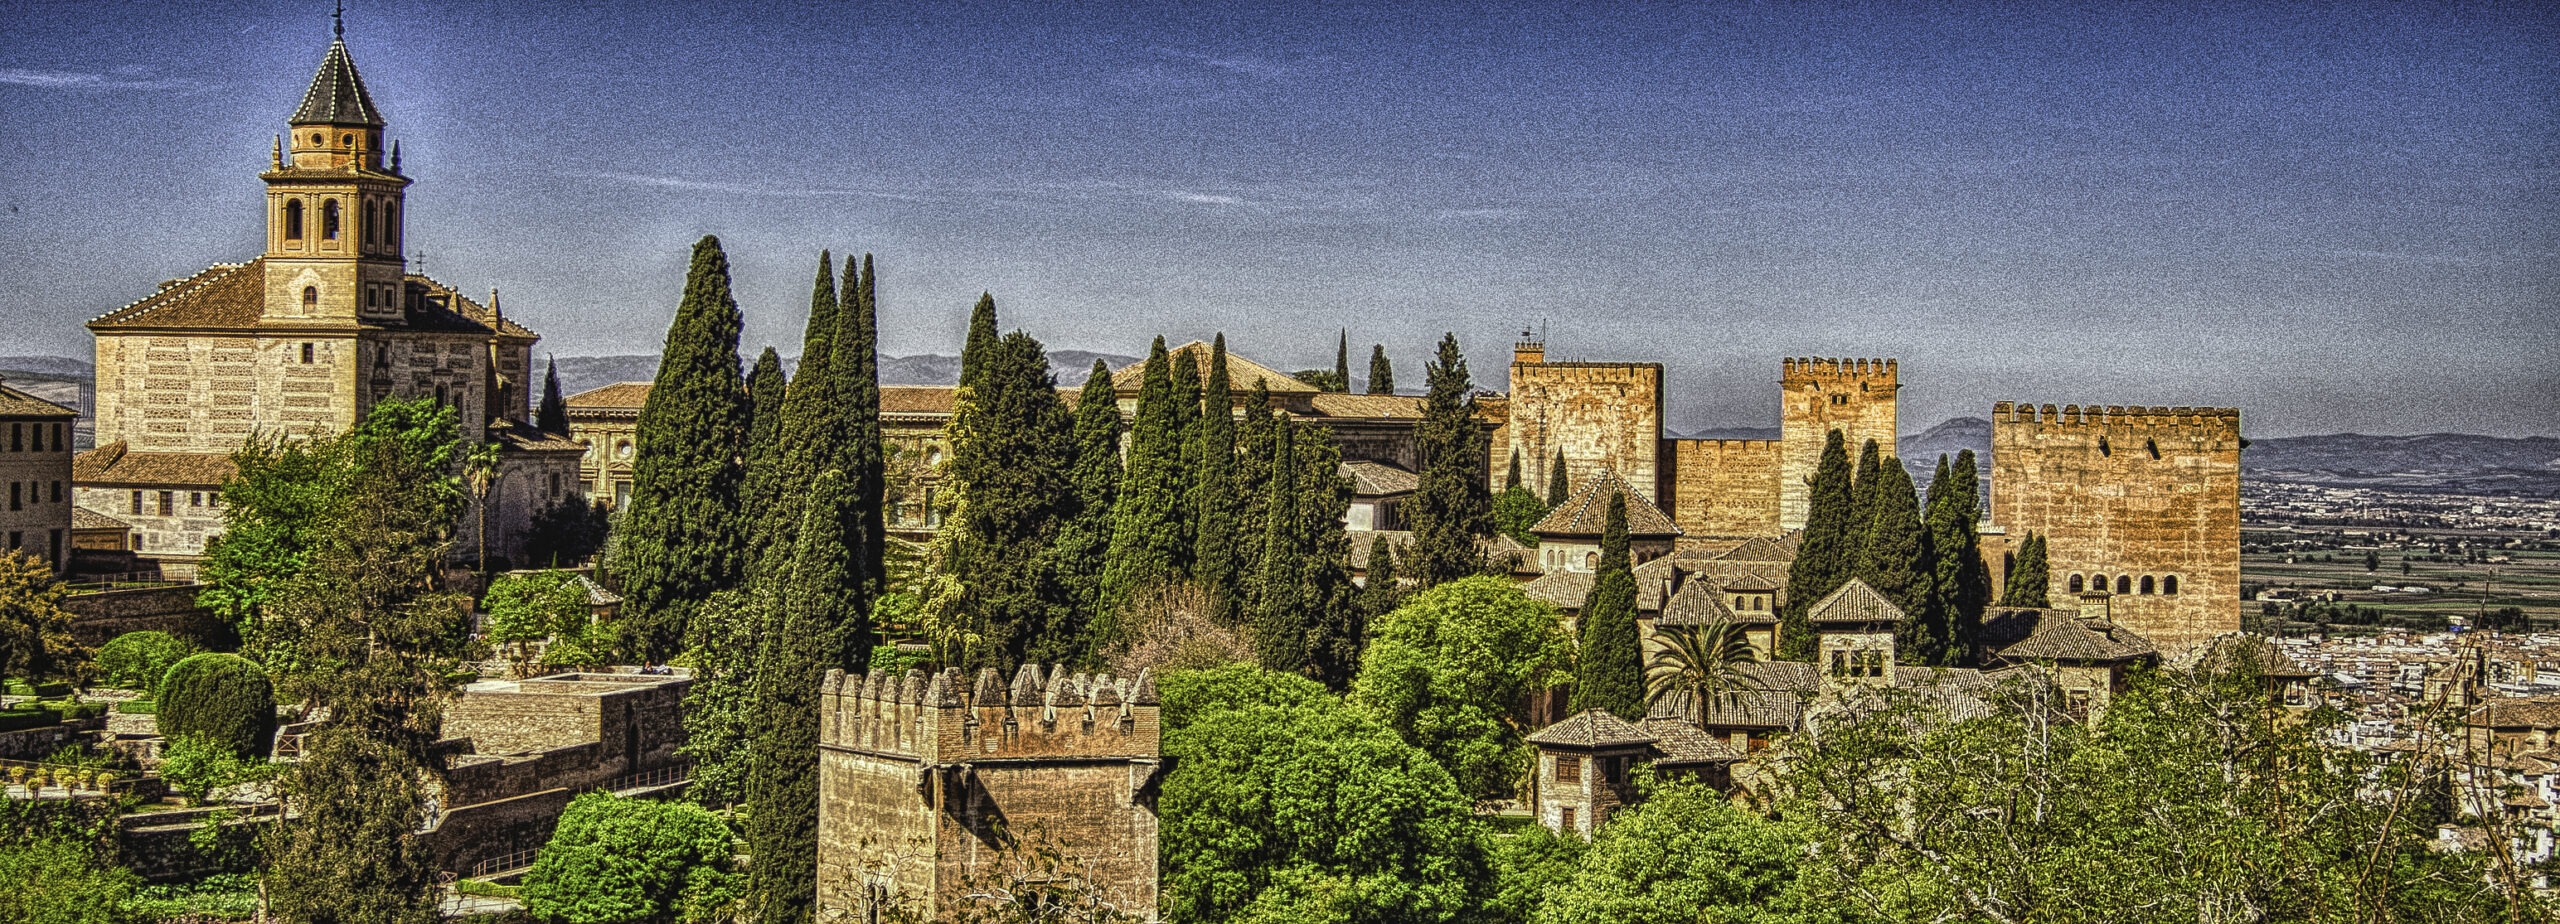 View of Alhambra from Generalife side in Granada, Spain